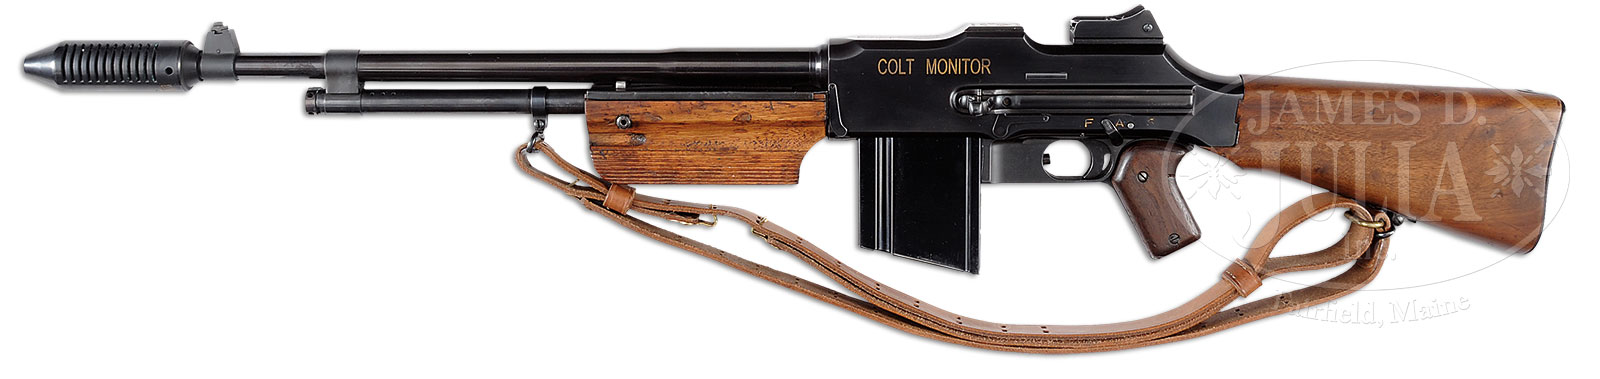 ABSOLUTELY FANTASTIC EXCEEDINGLY RARE COLT MONITOR MACHINE GUN U.S.M.C. MARKED (C&R).